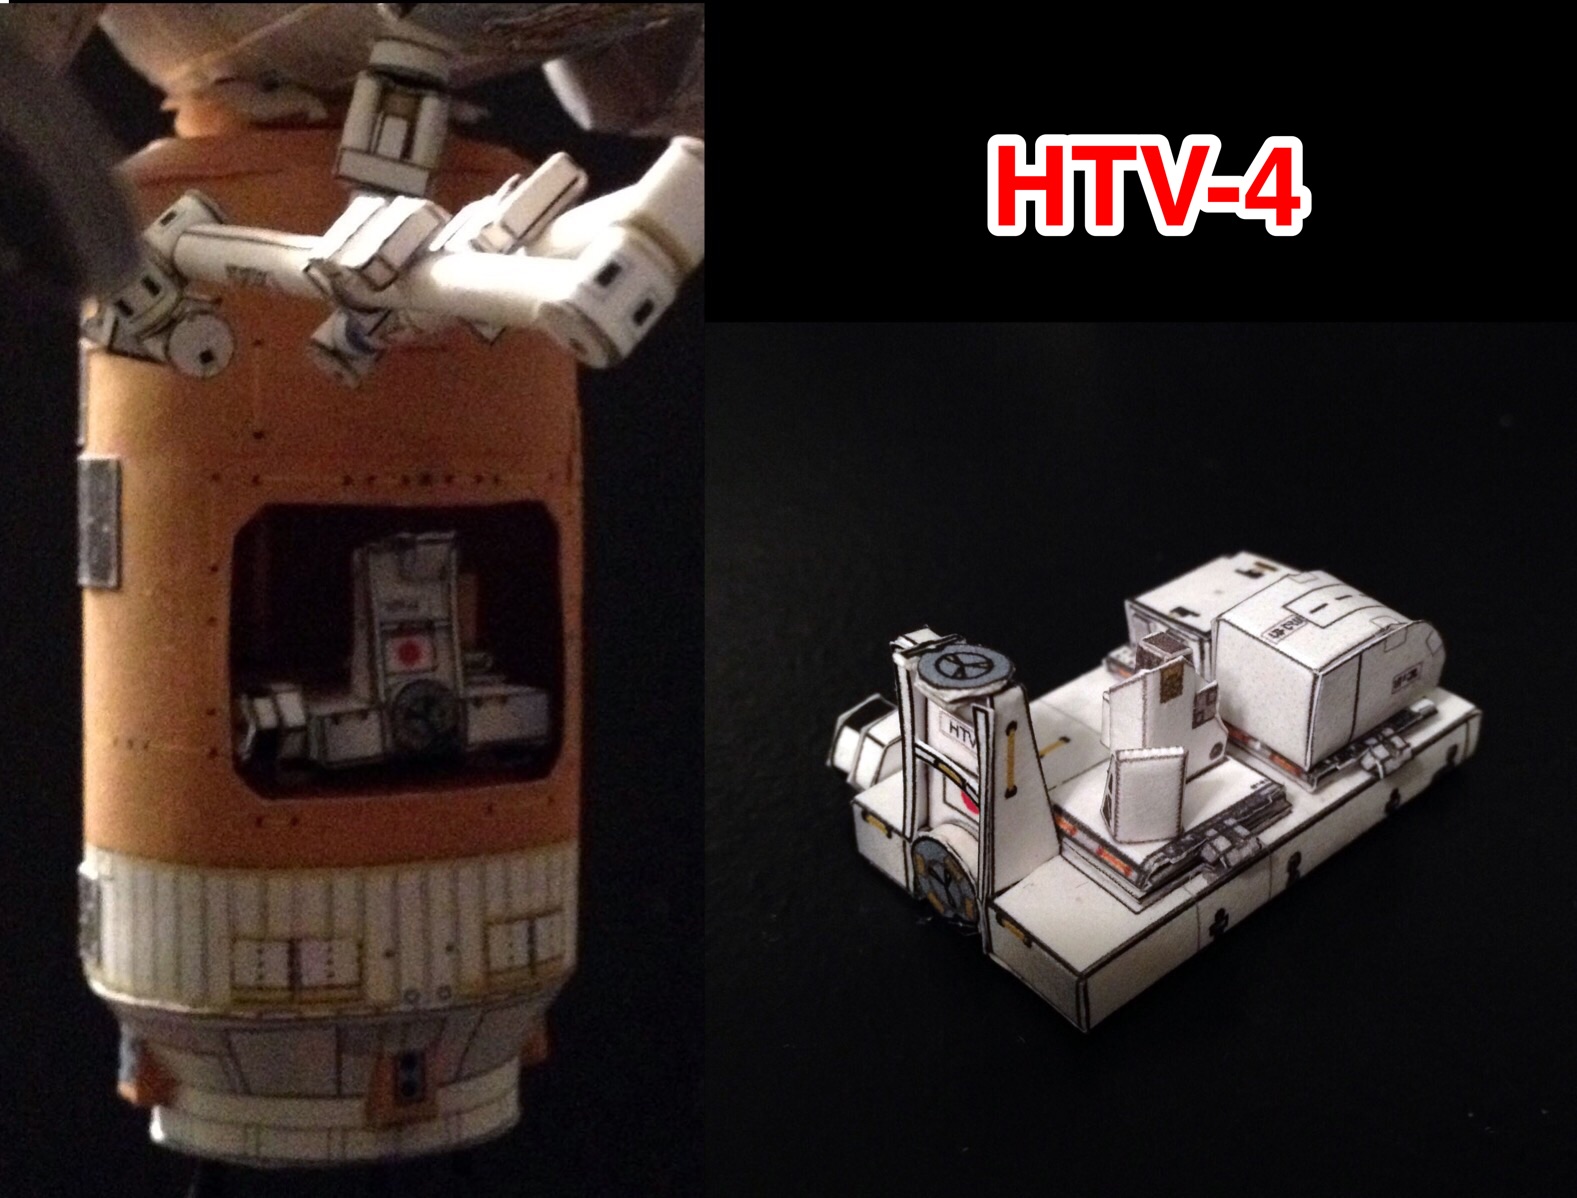 HTV-4-image